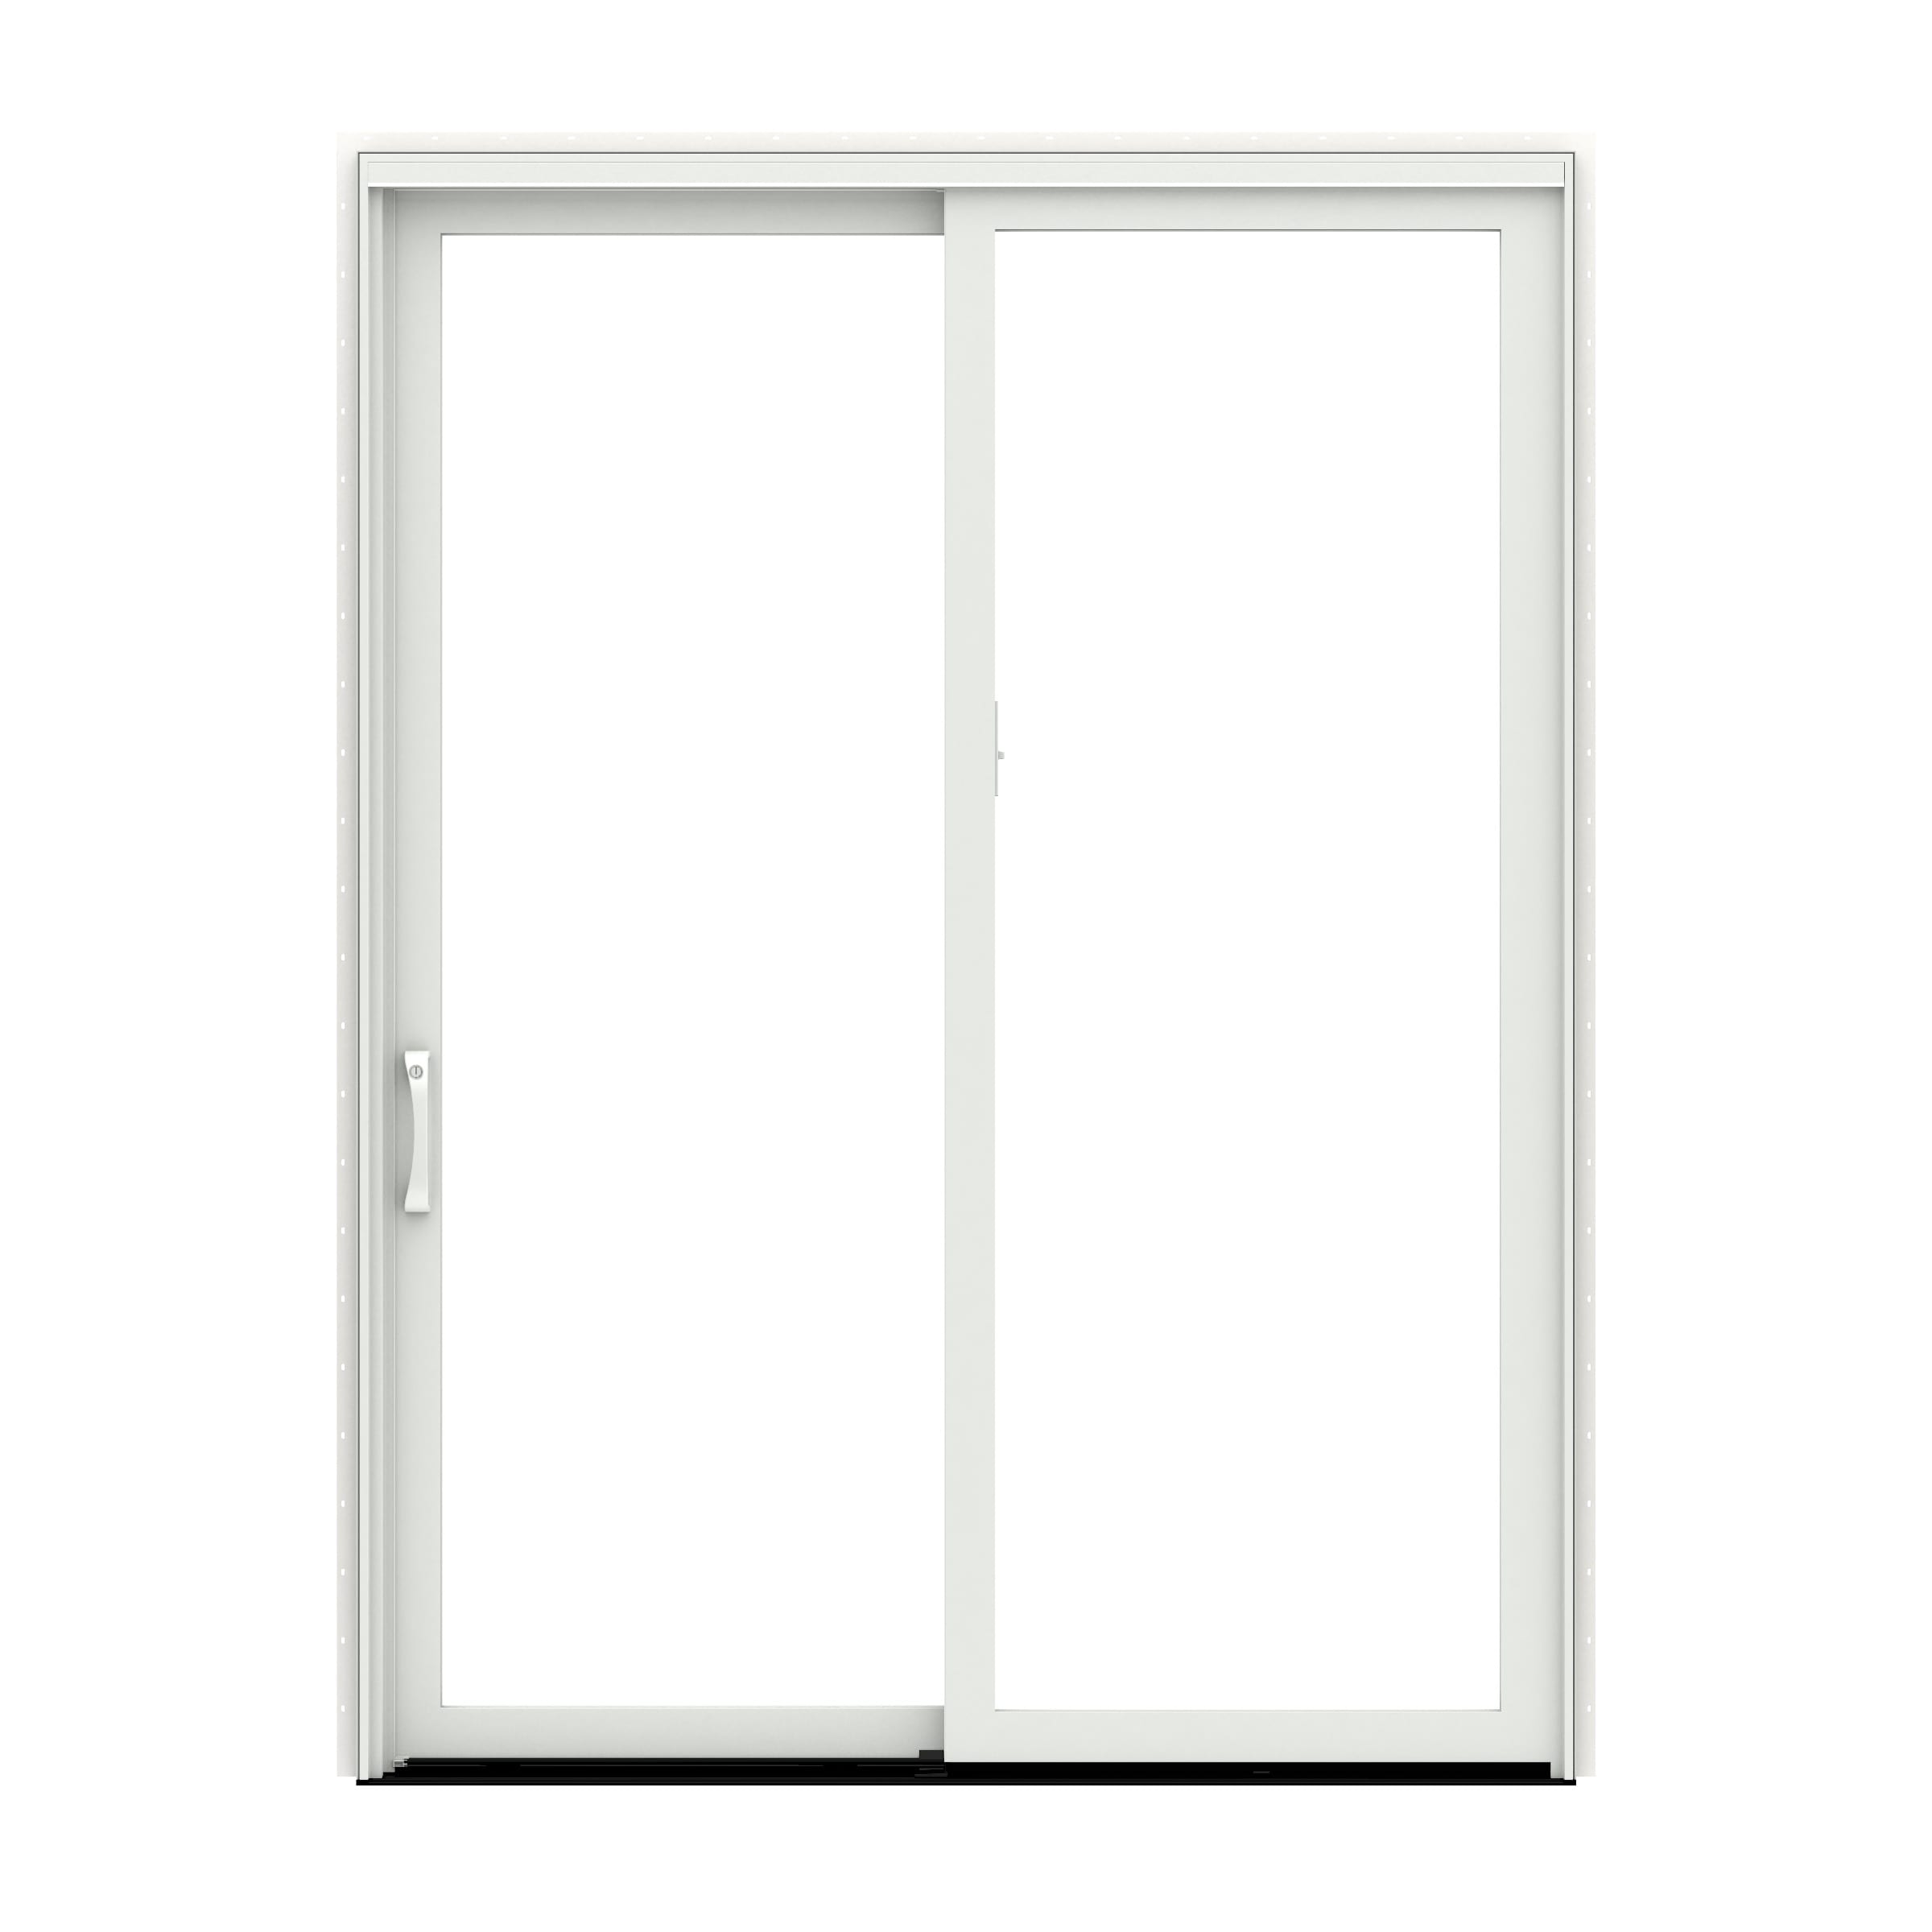 Impervia Series 72-in x 80-in Low-e Argon White Fiberglass Sliding Left-Hand Sliding Double Patio Door | - Pella 1000011488